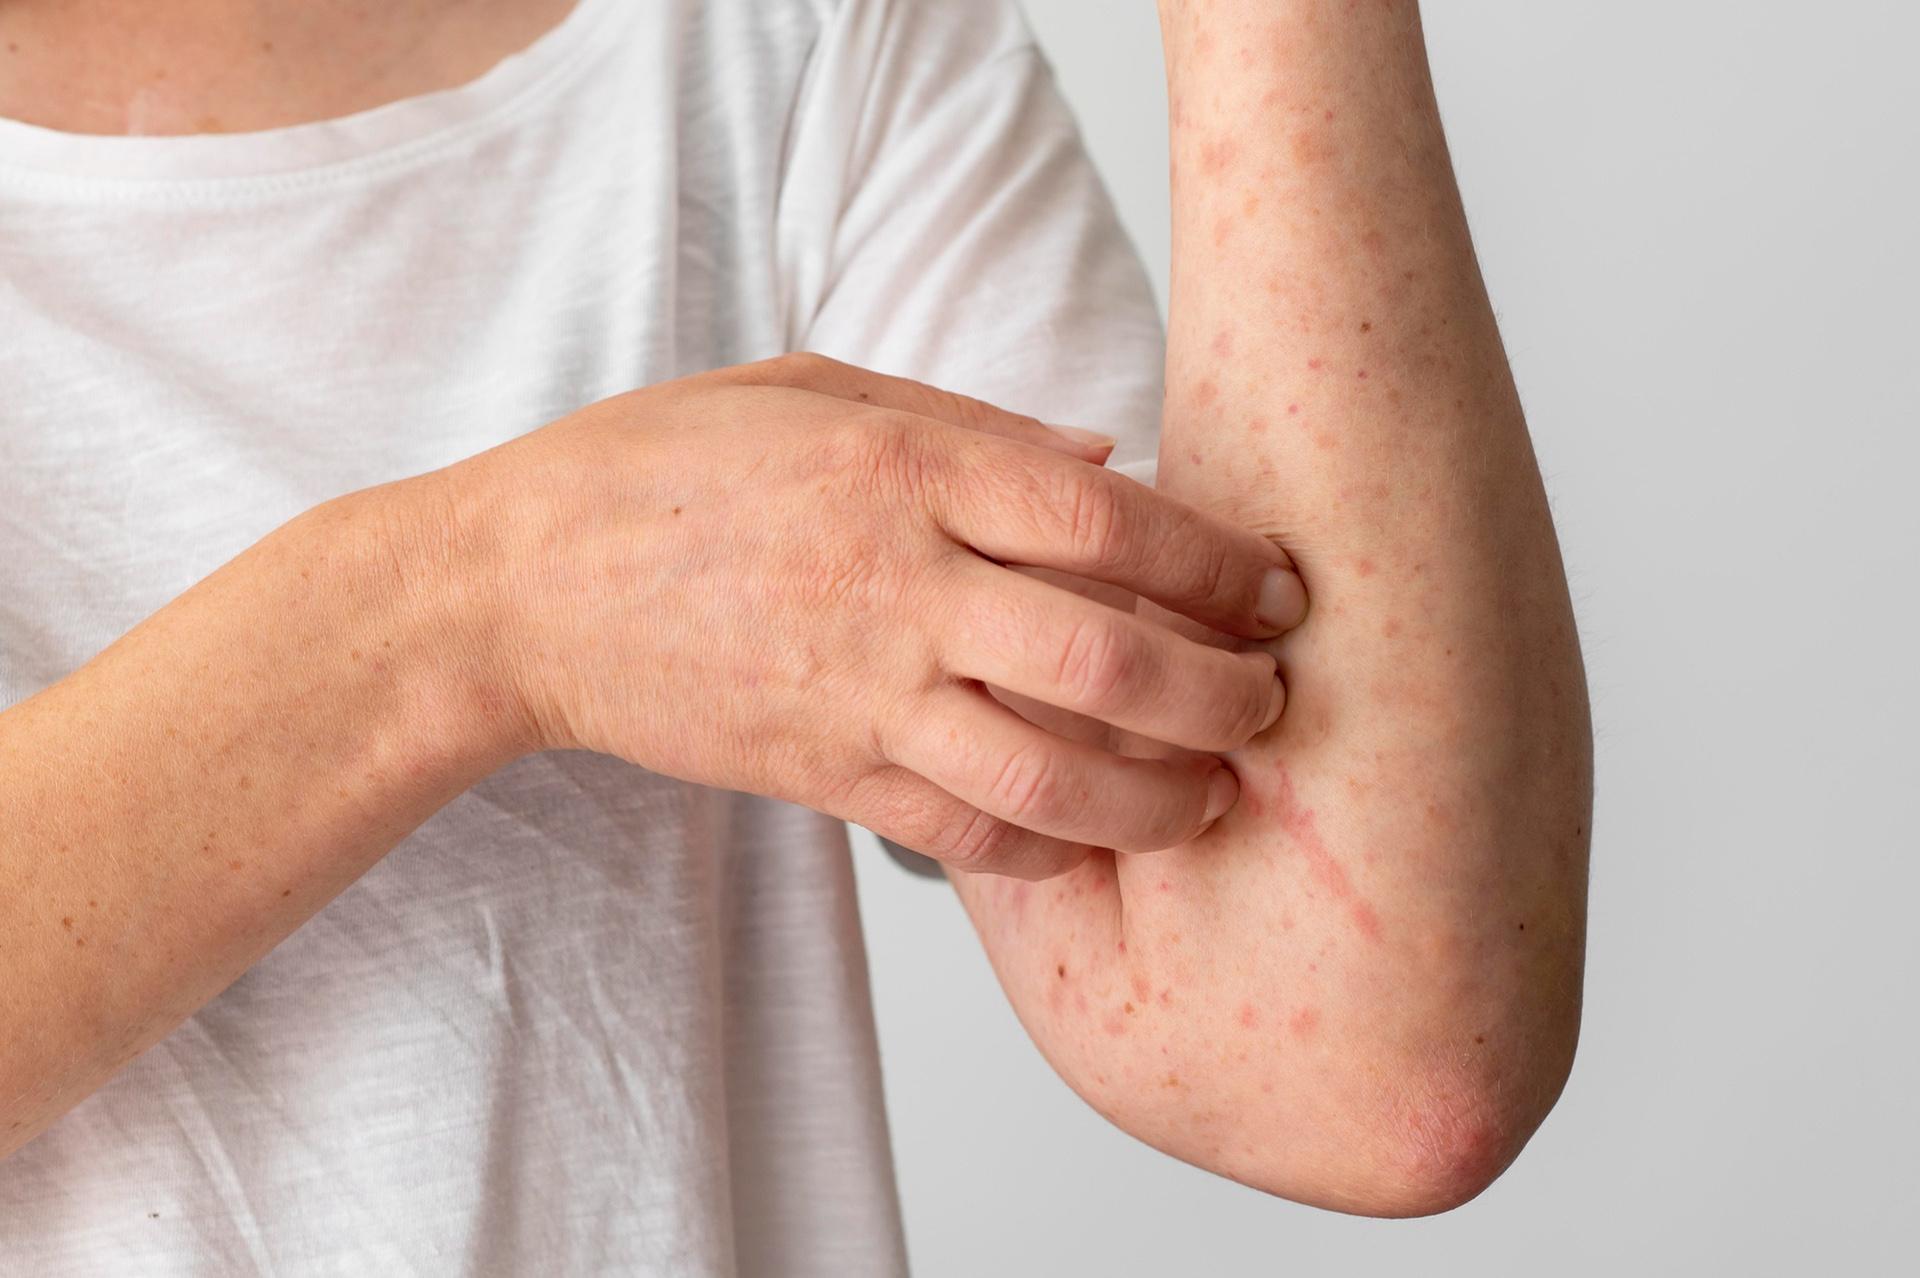 एक्जिमा त्वचा का भड़कना: एक्जिमा के लक्षण और इसकी रोकथाम